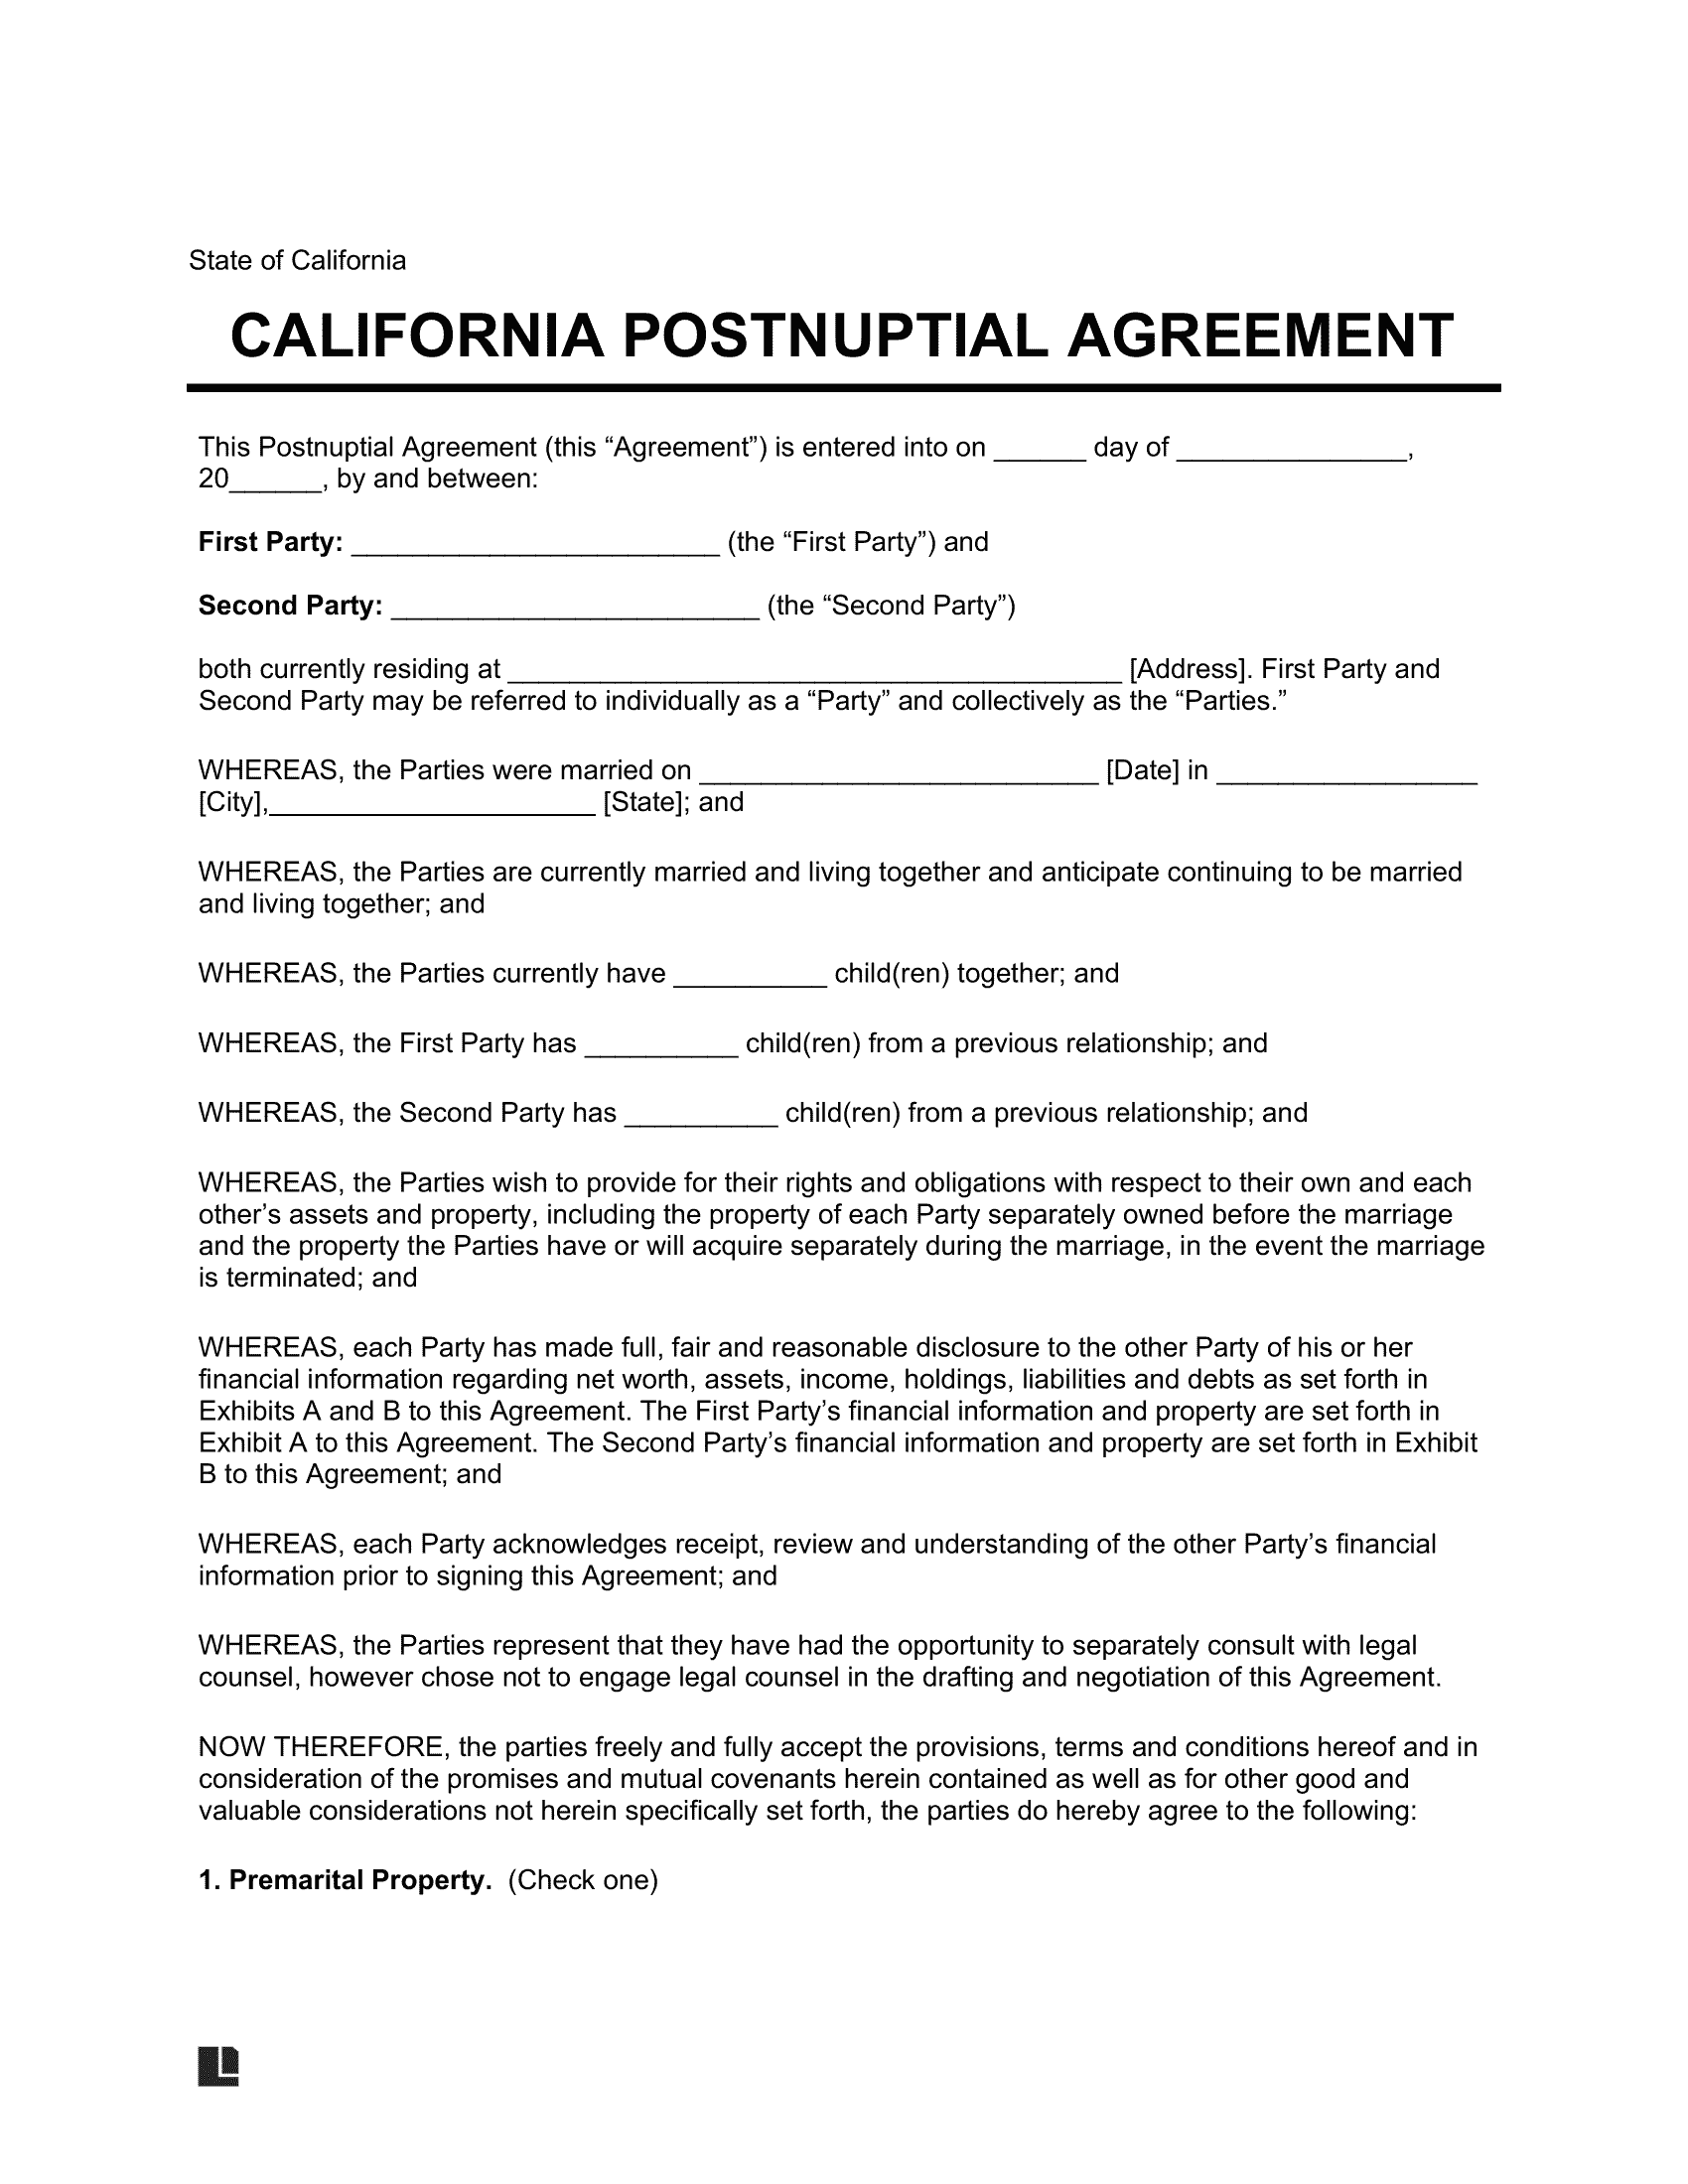 California Postnuptial Agreement Template